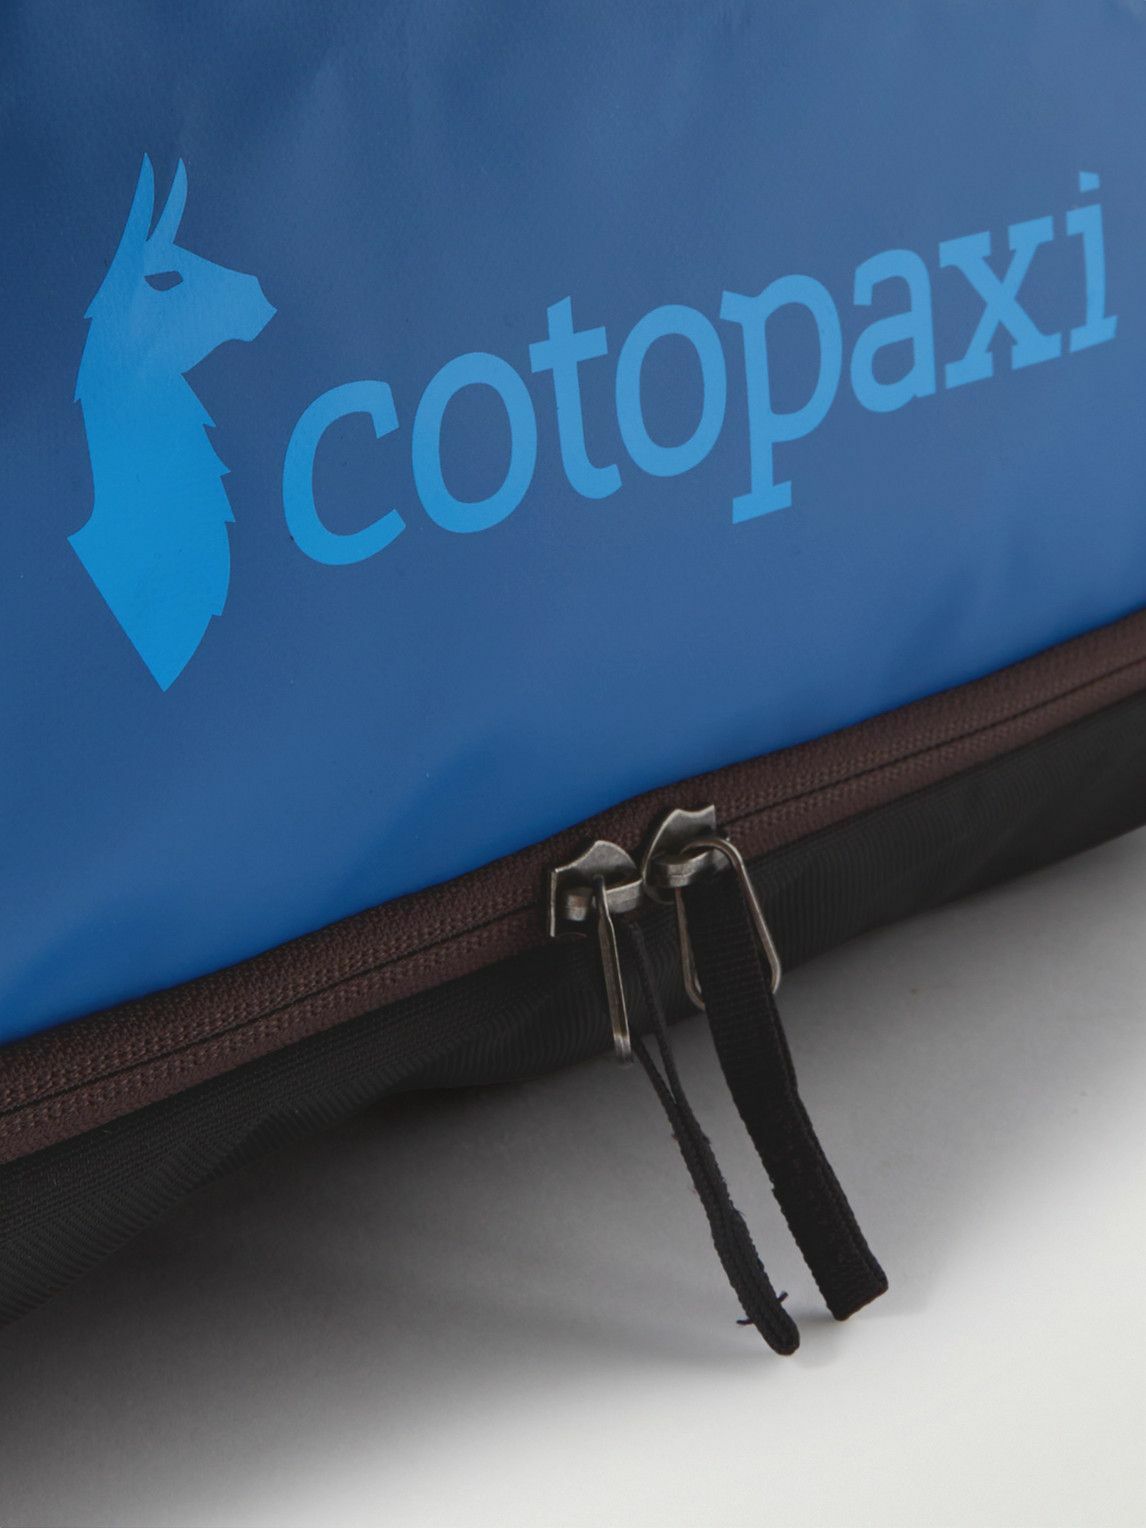 Cotopaxi - Allpa 50L Logo-Print Shell and Canvas Duffle Bag Cotopaxi